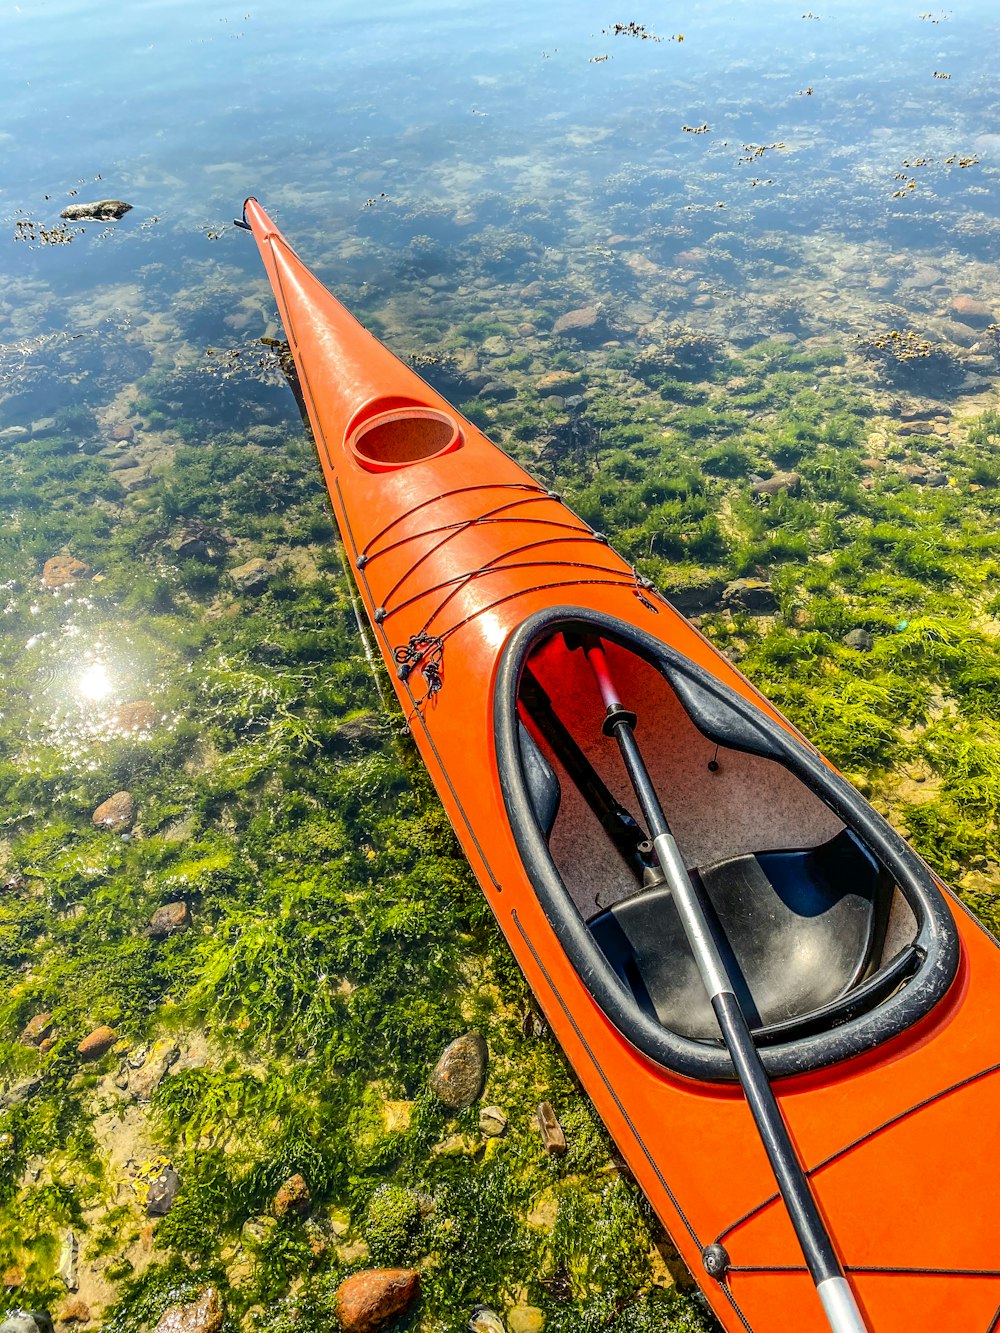 orange and black kayak on green grass field